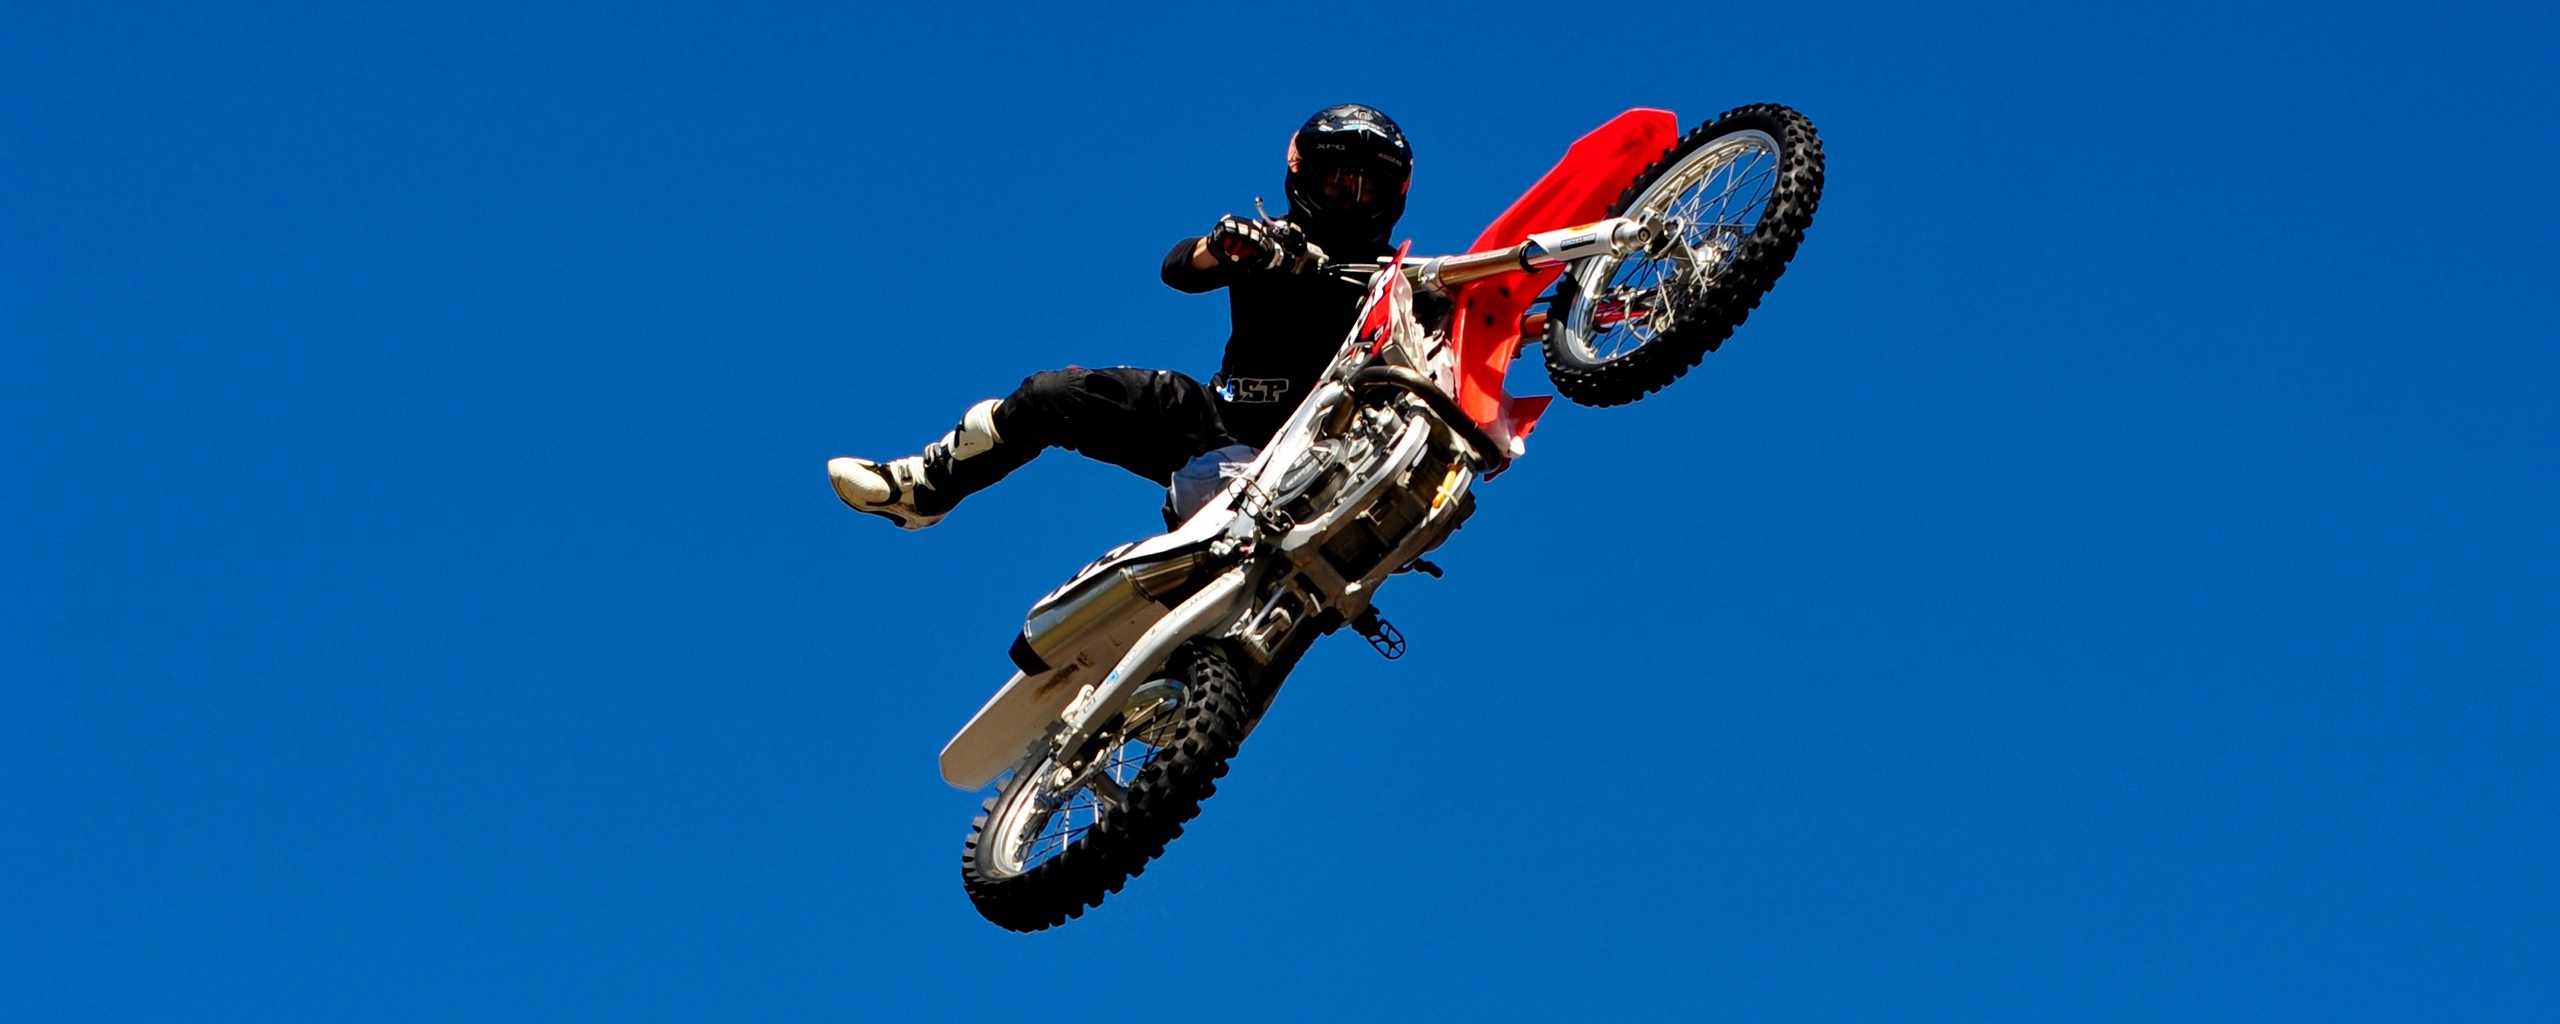 Wallpaper Motorcycle, Motorcyclist, Jump, Extreme, - Motocross - HD Wallpaper 